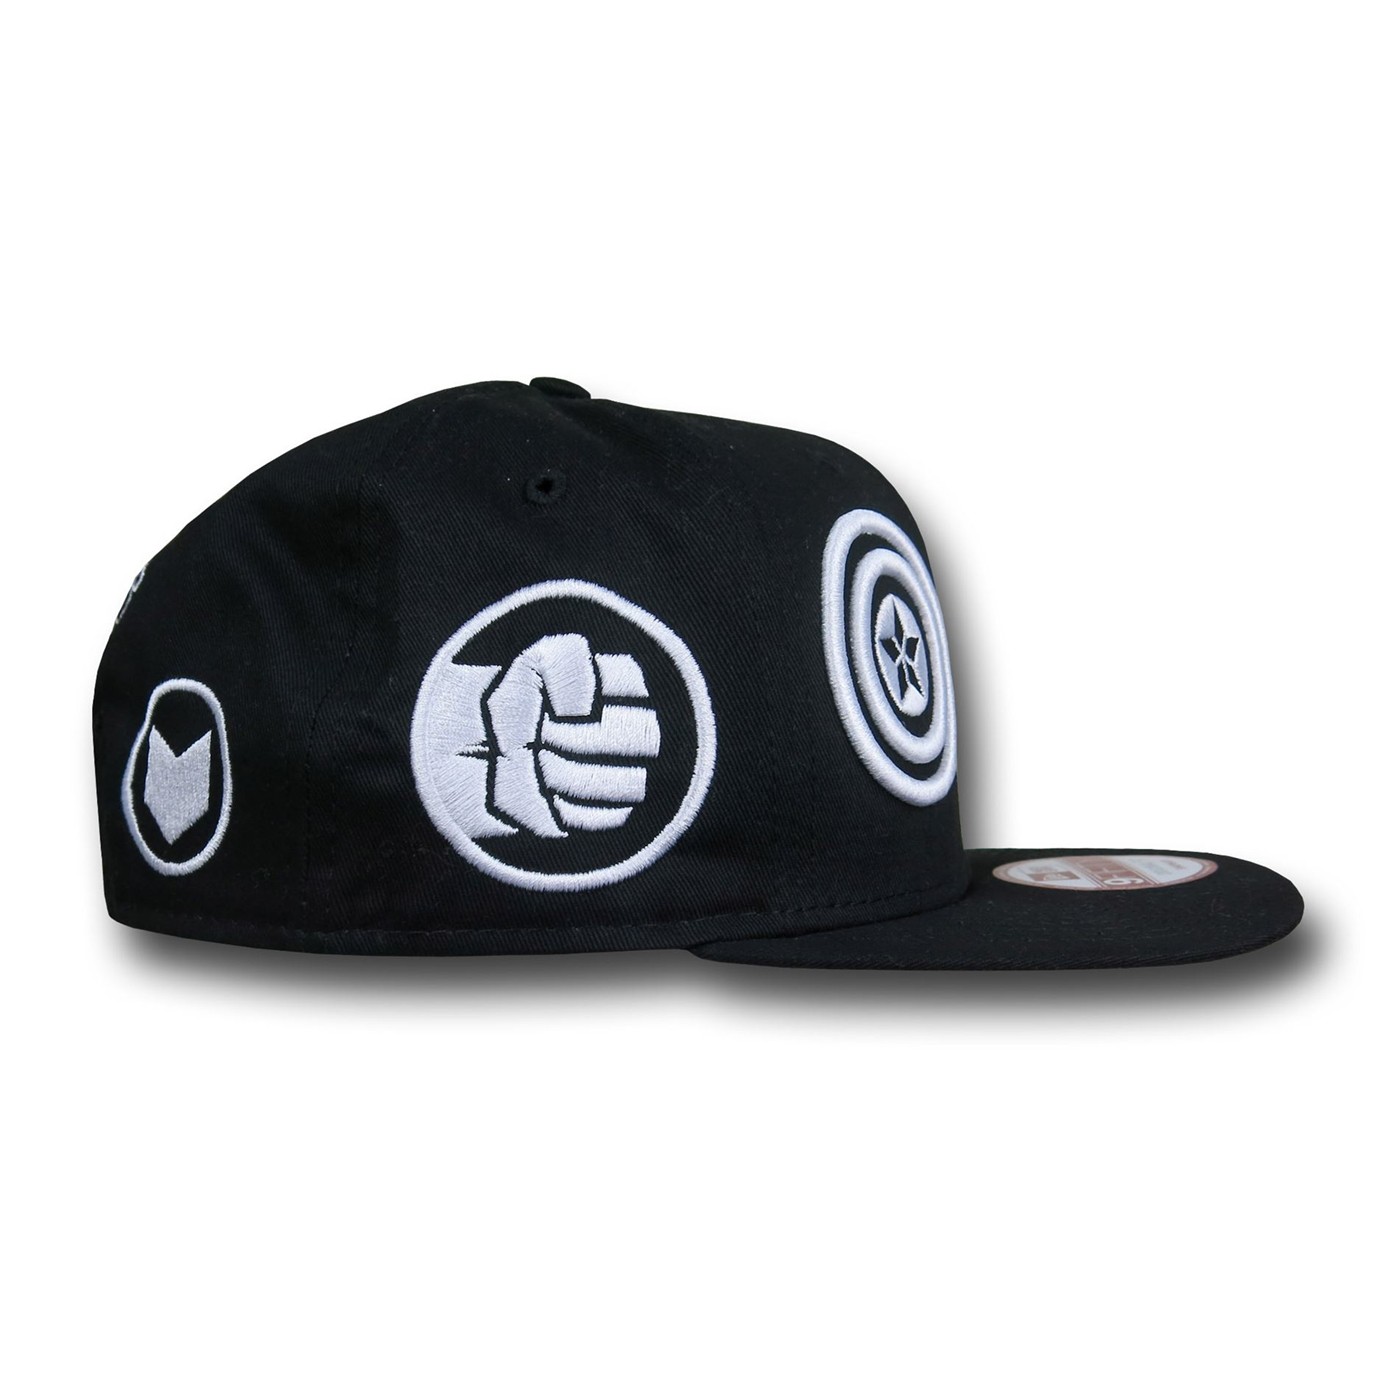 Avengers AoU Tonal Symbols 9Fifty Snapback Hat